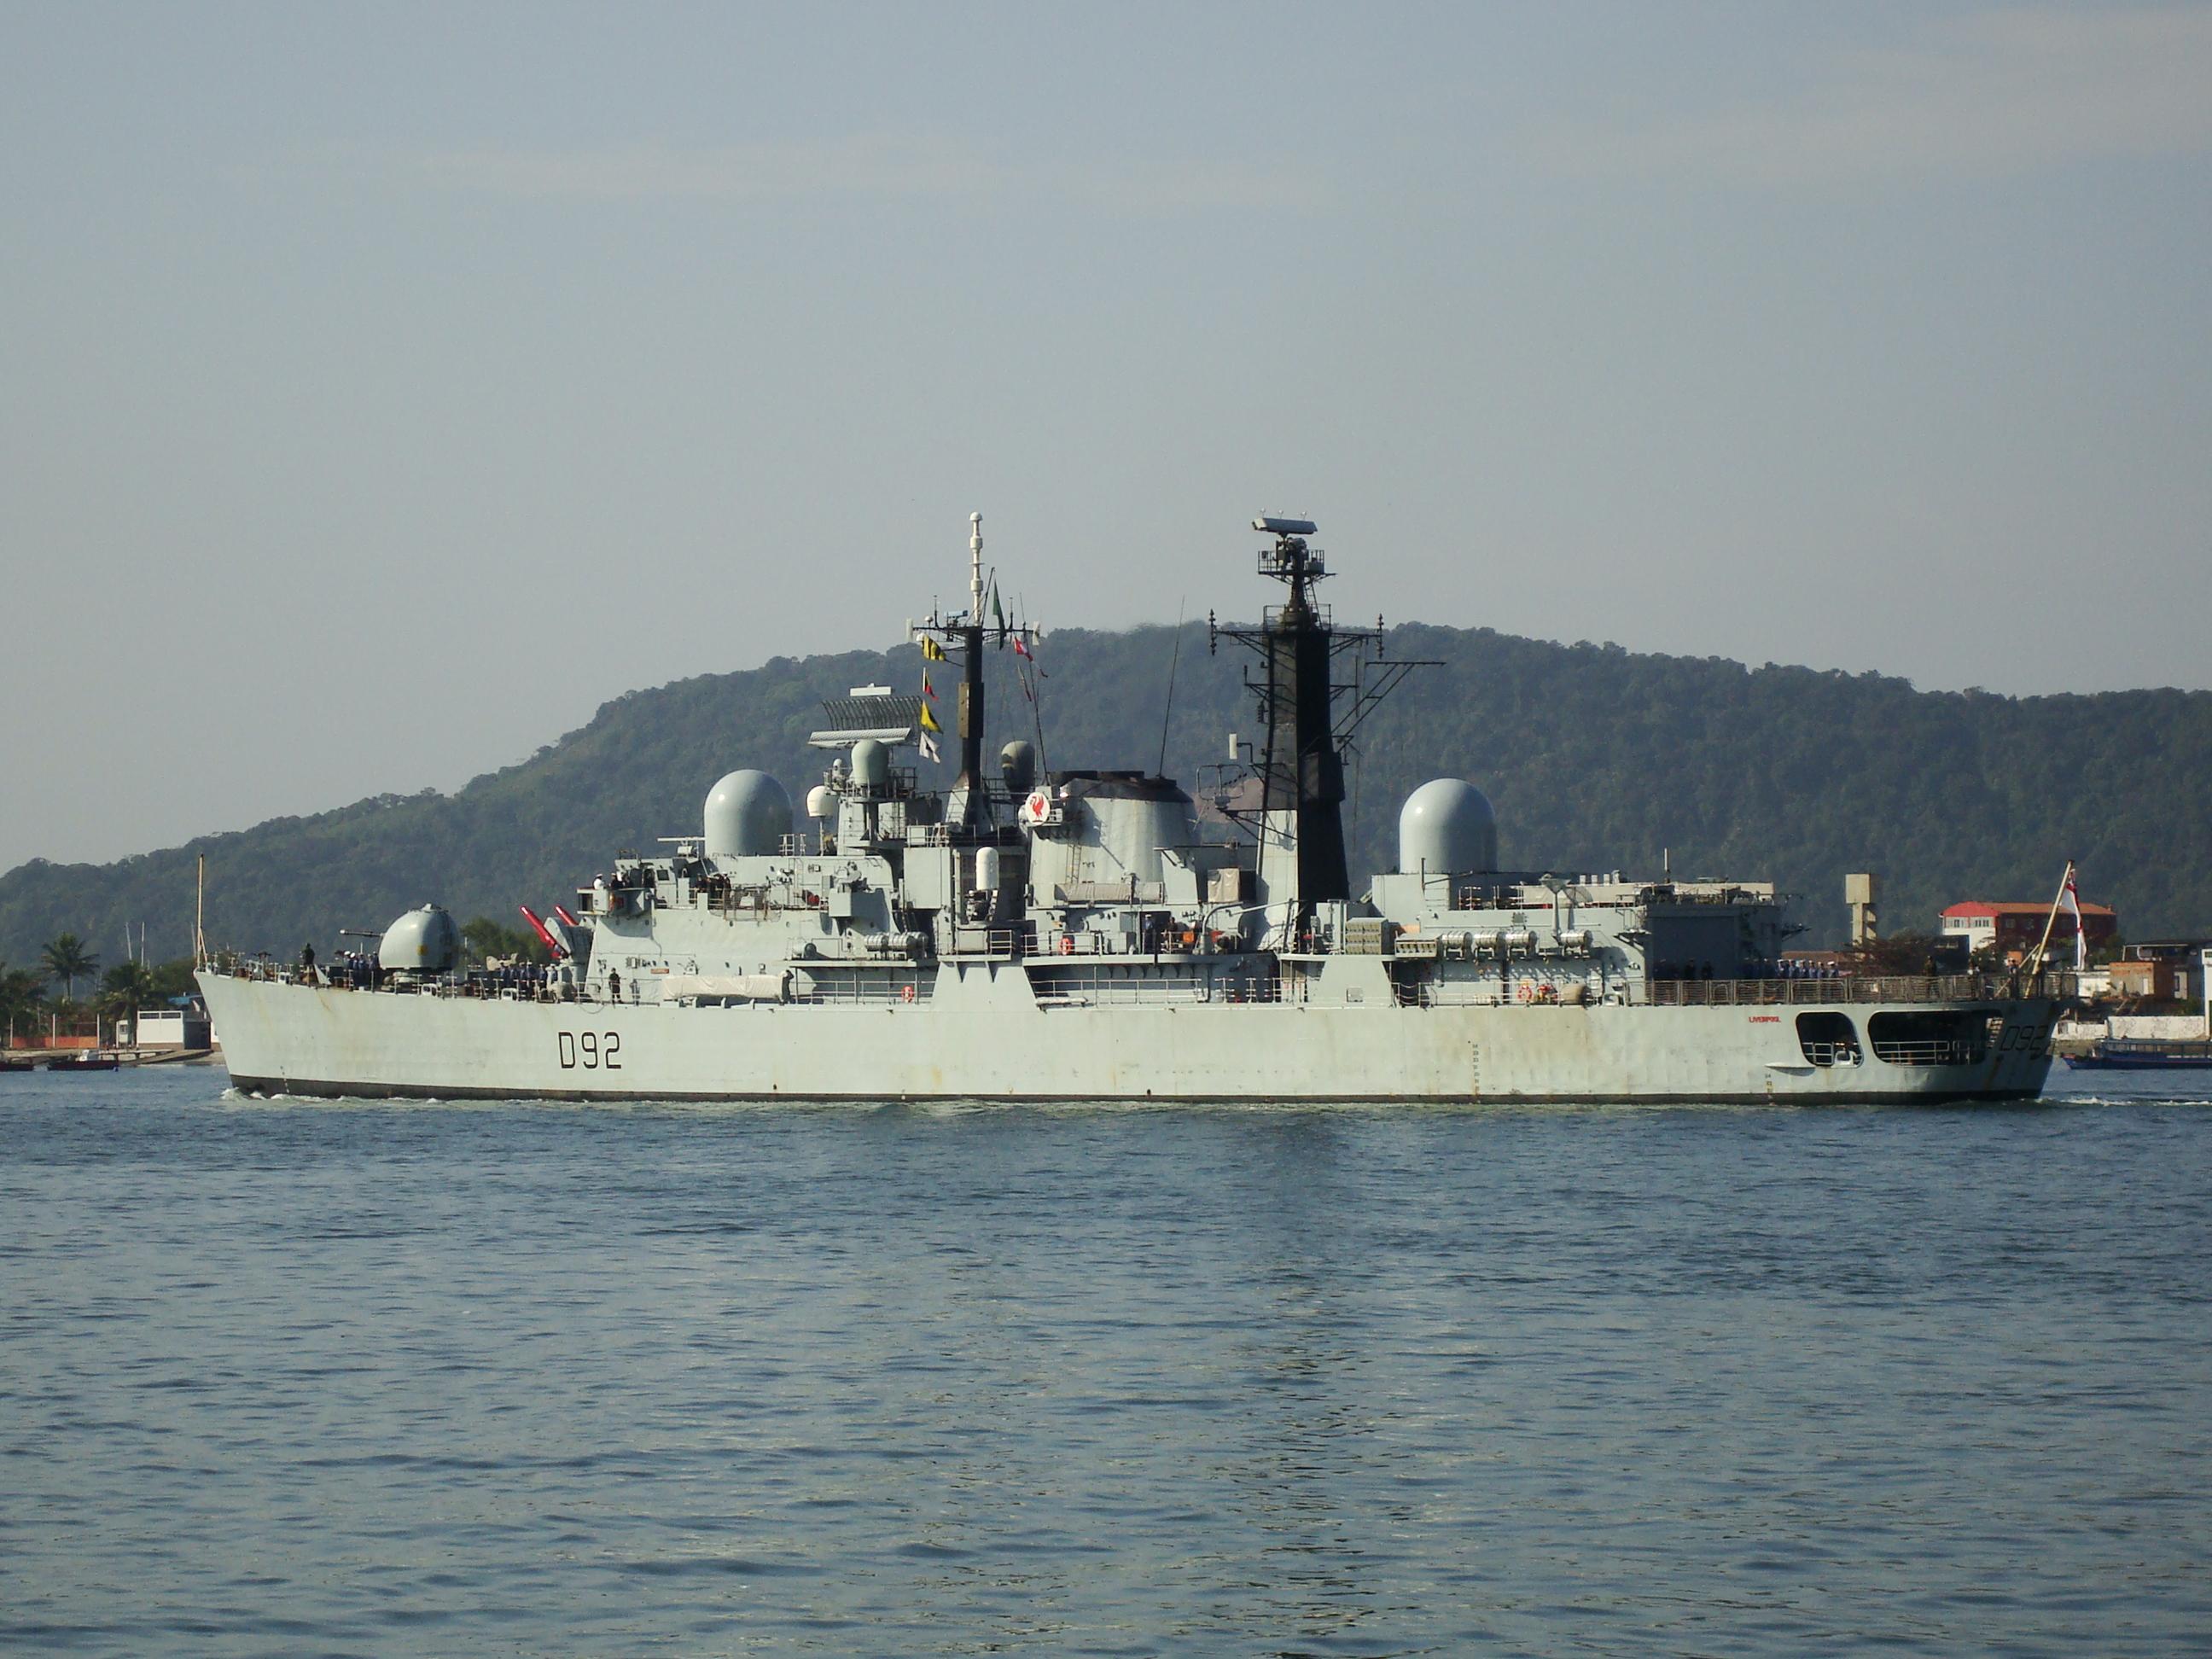 HMS Liverpool D-92